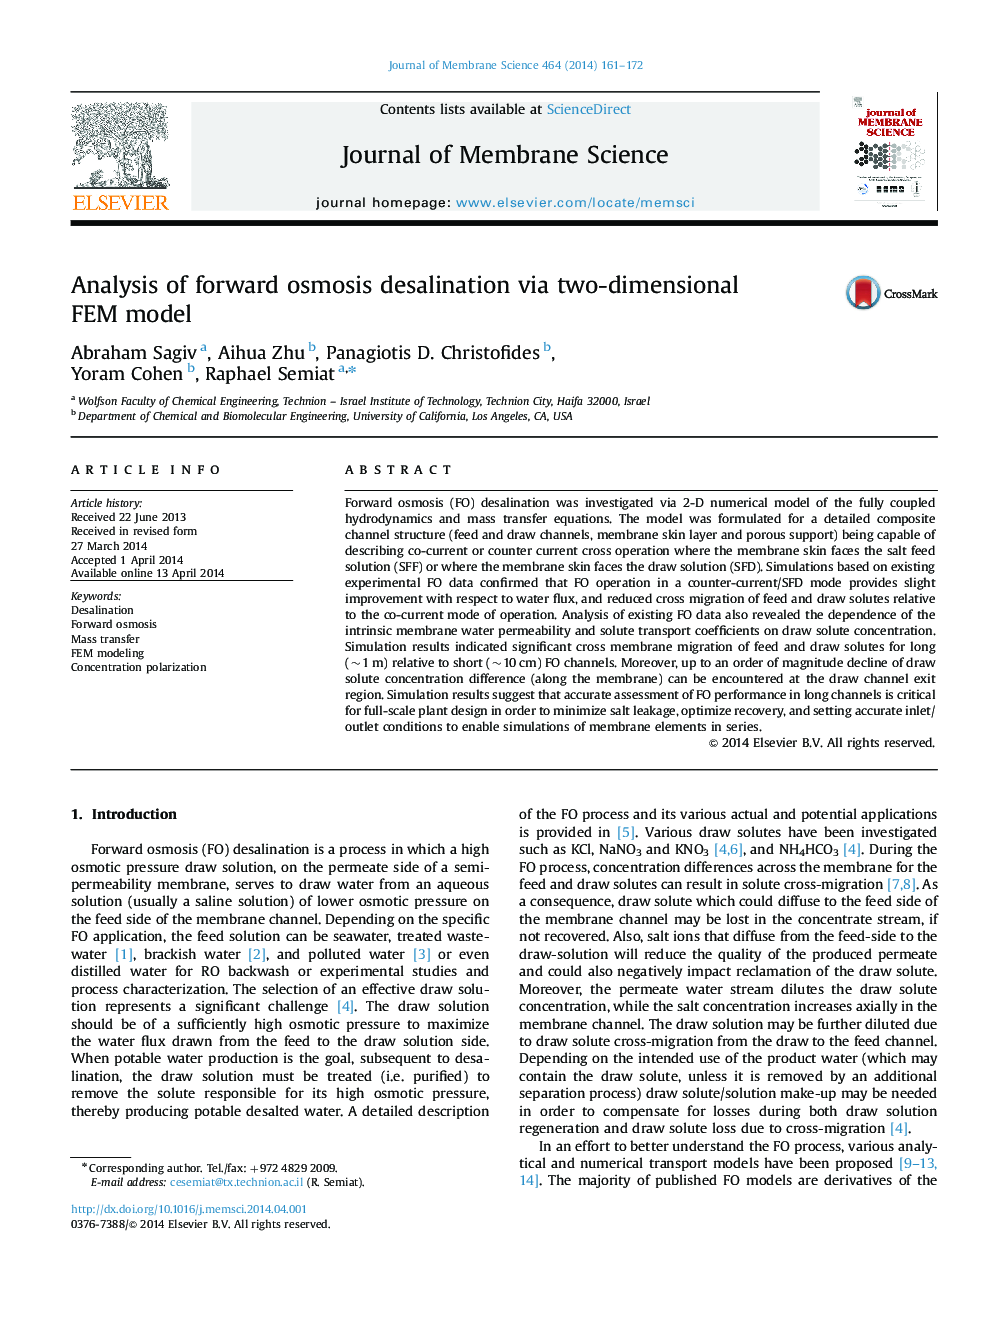 Analysis of forward osmosis desalination via two-dimensional FEM model